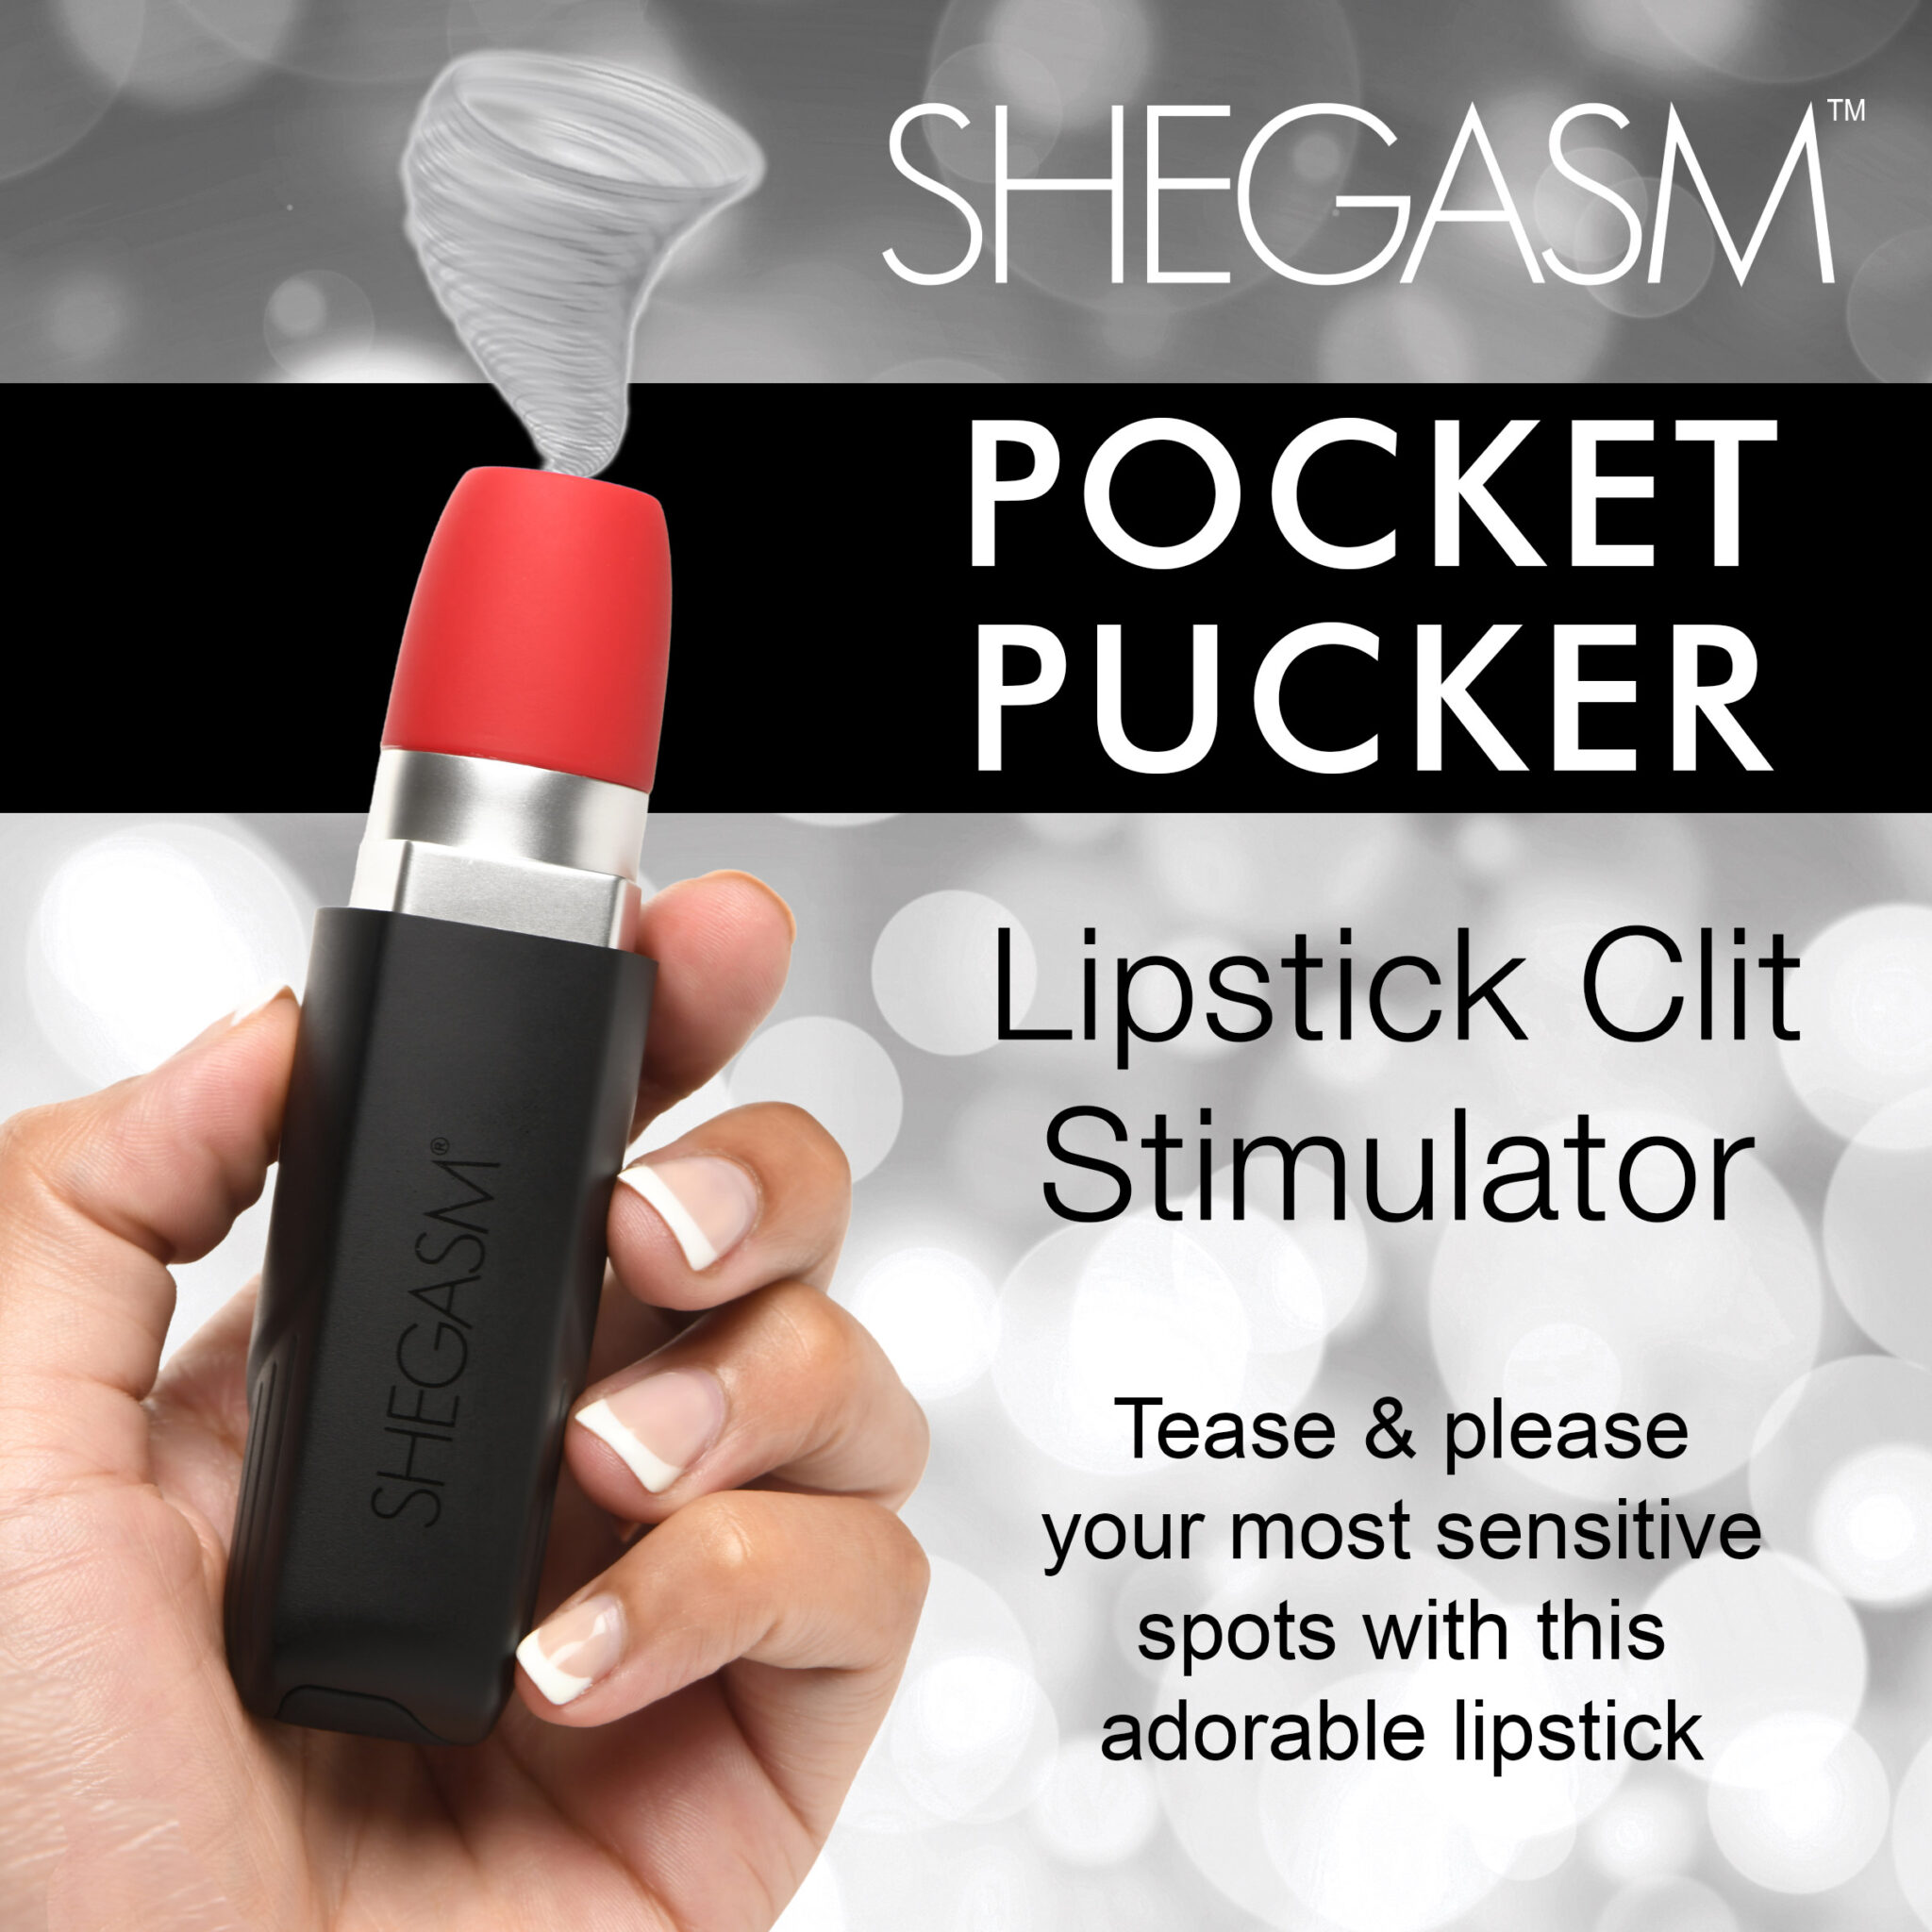 Pocket Pucker Lipstick Clit Stimulator